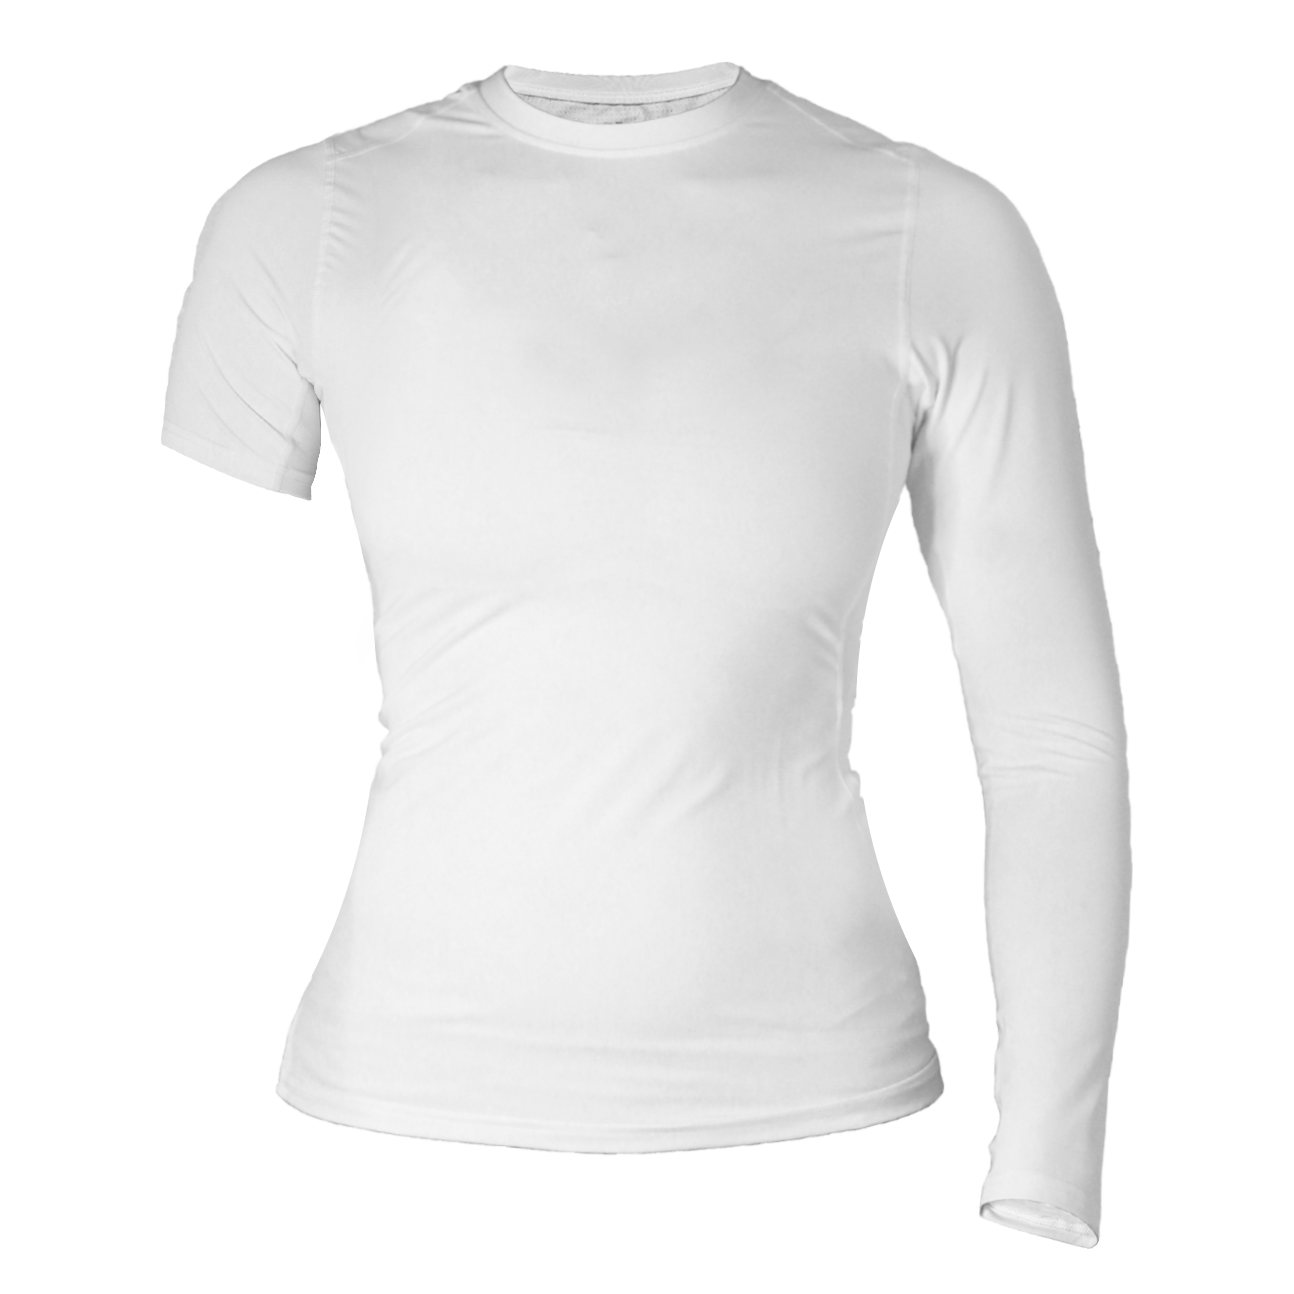  Women's Compression Shirts - White / Women's